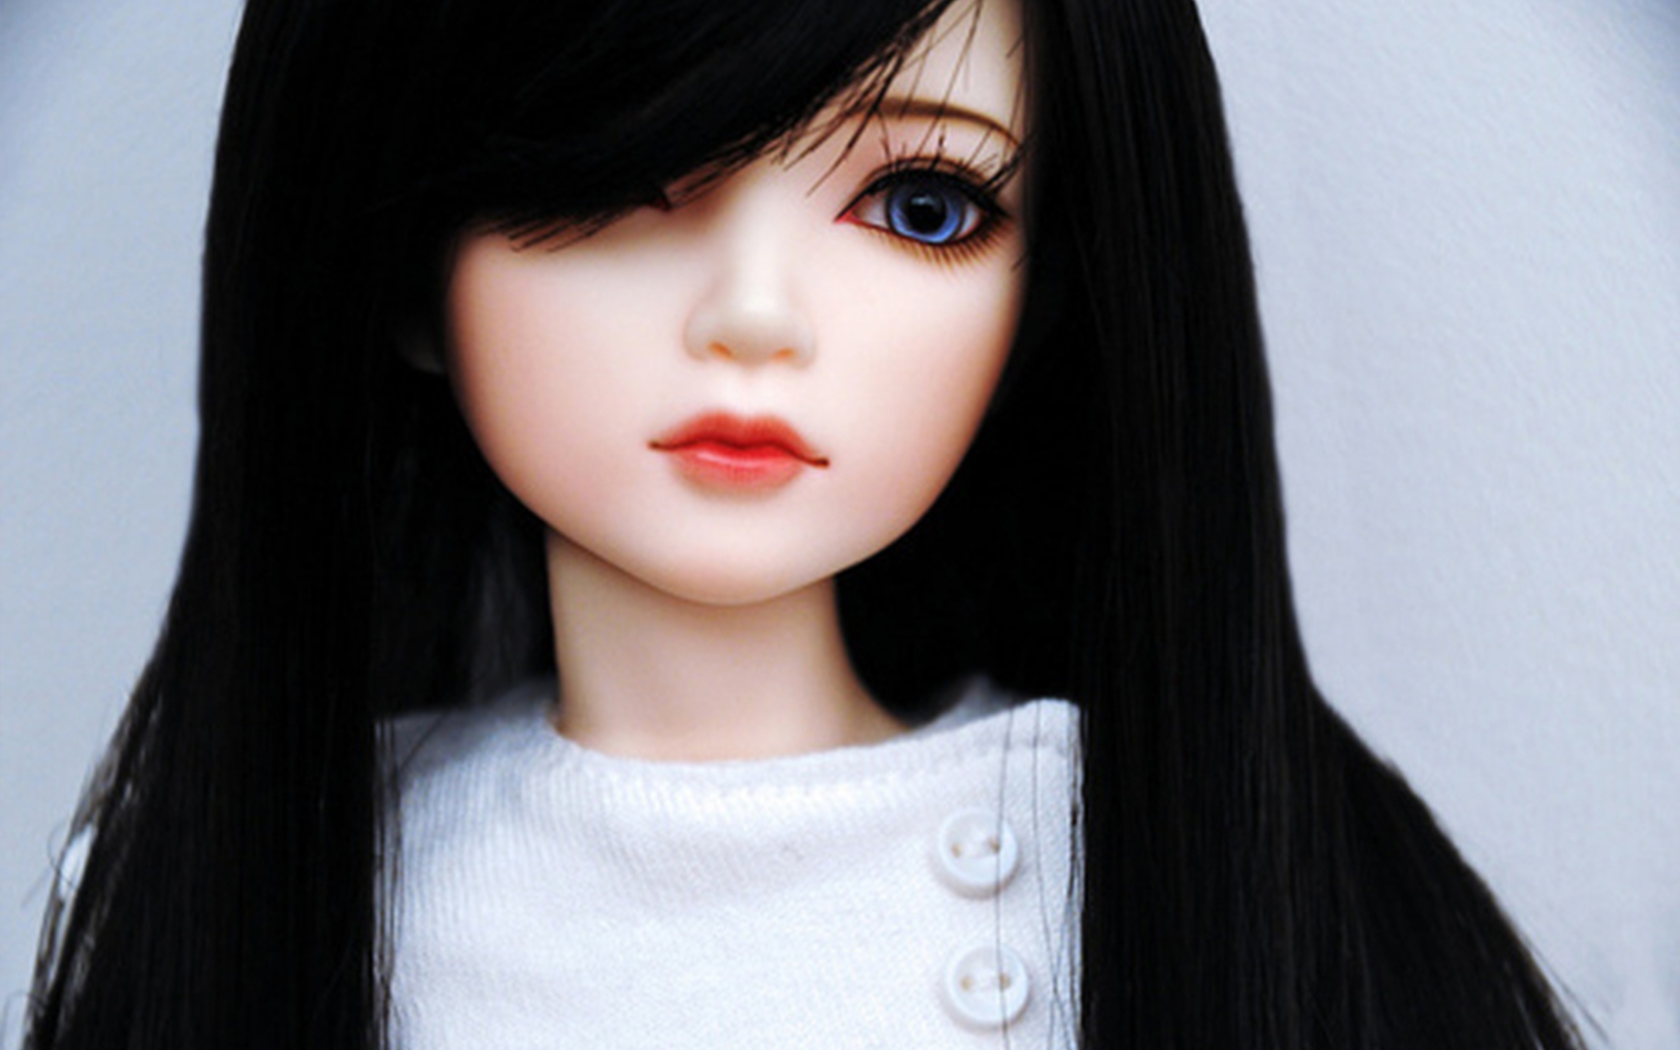 Cute Barbie Doll